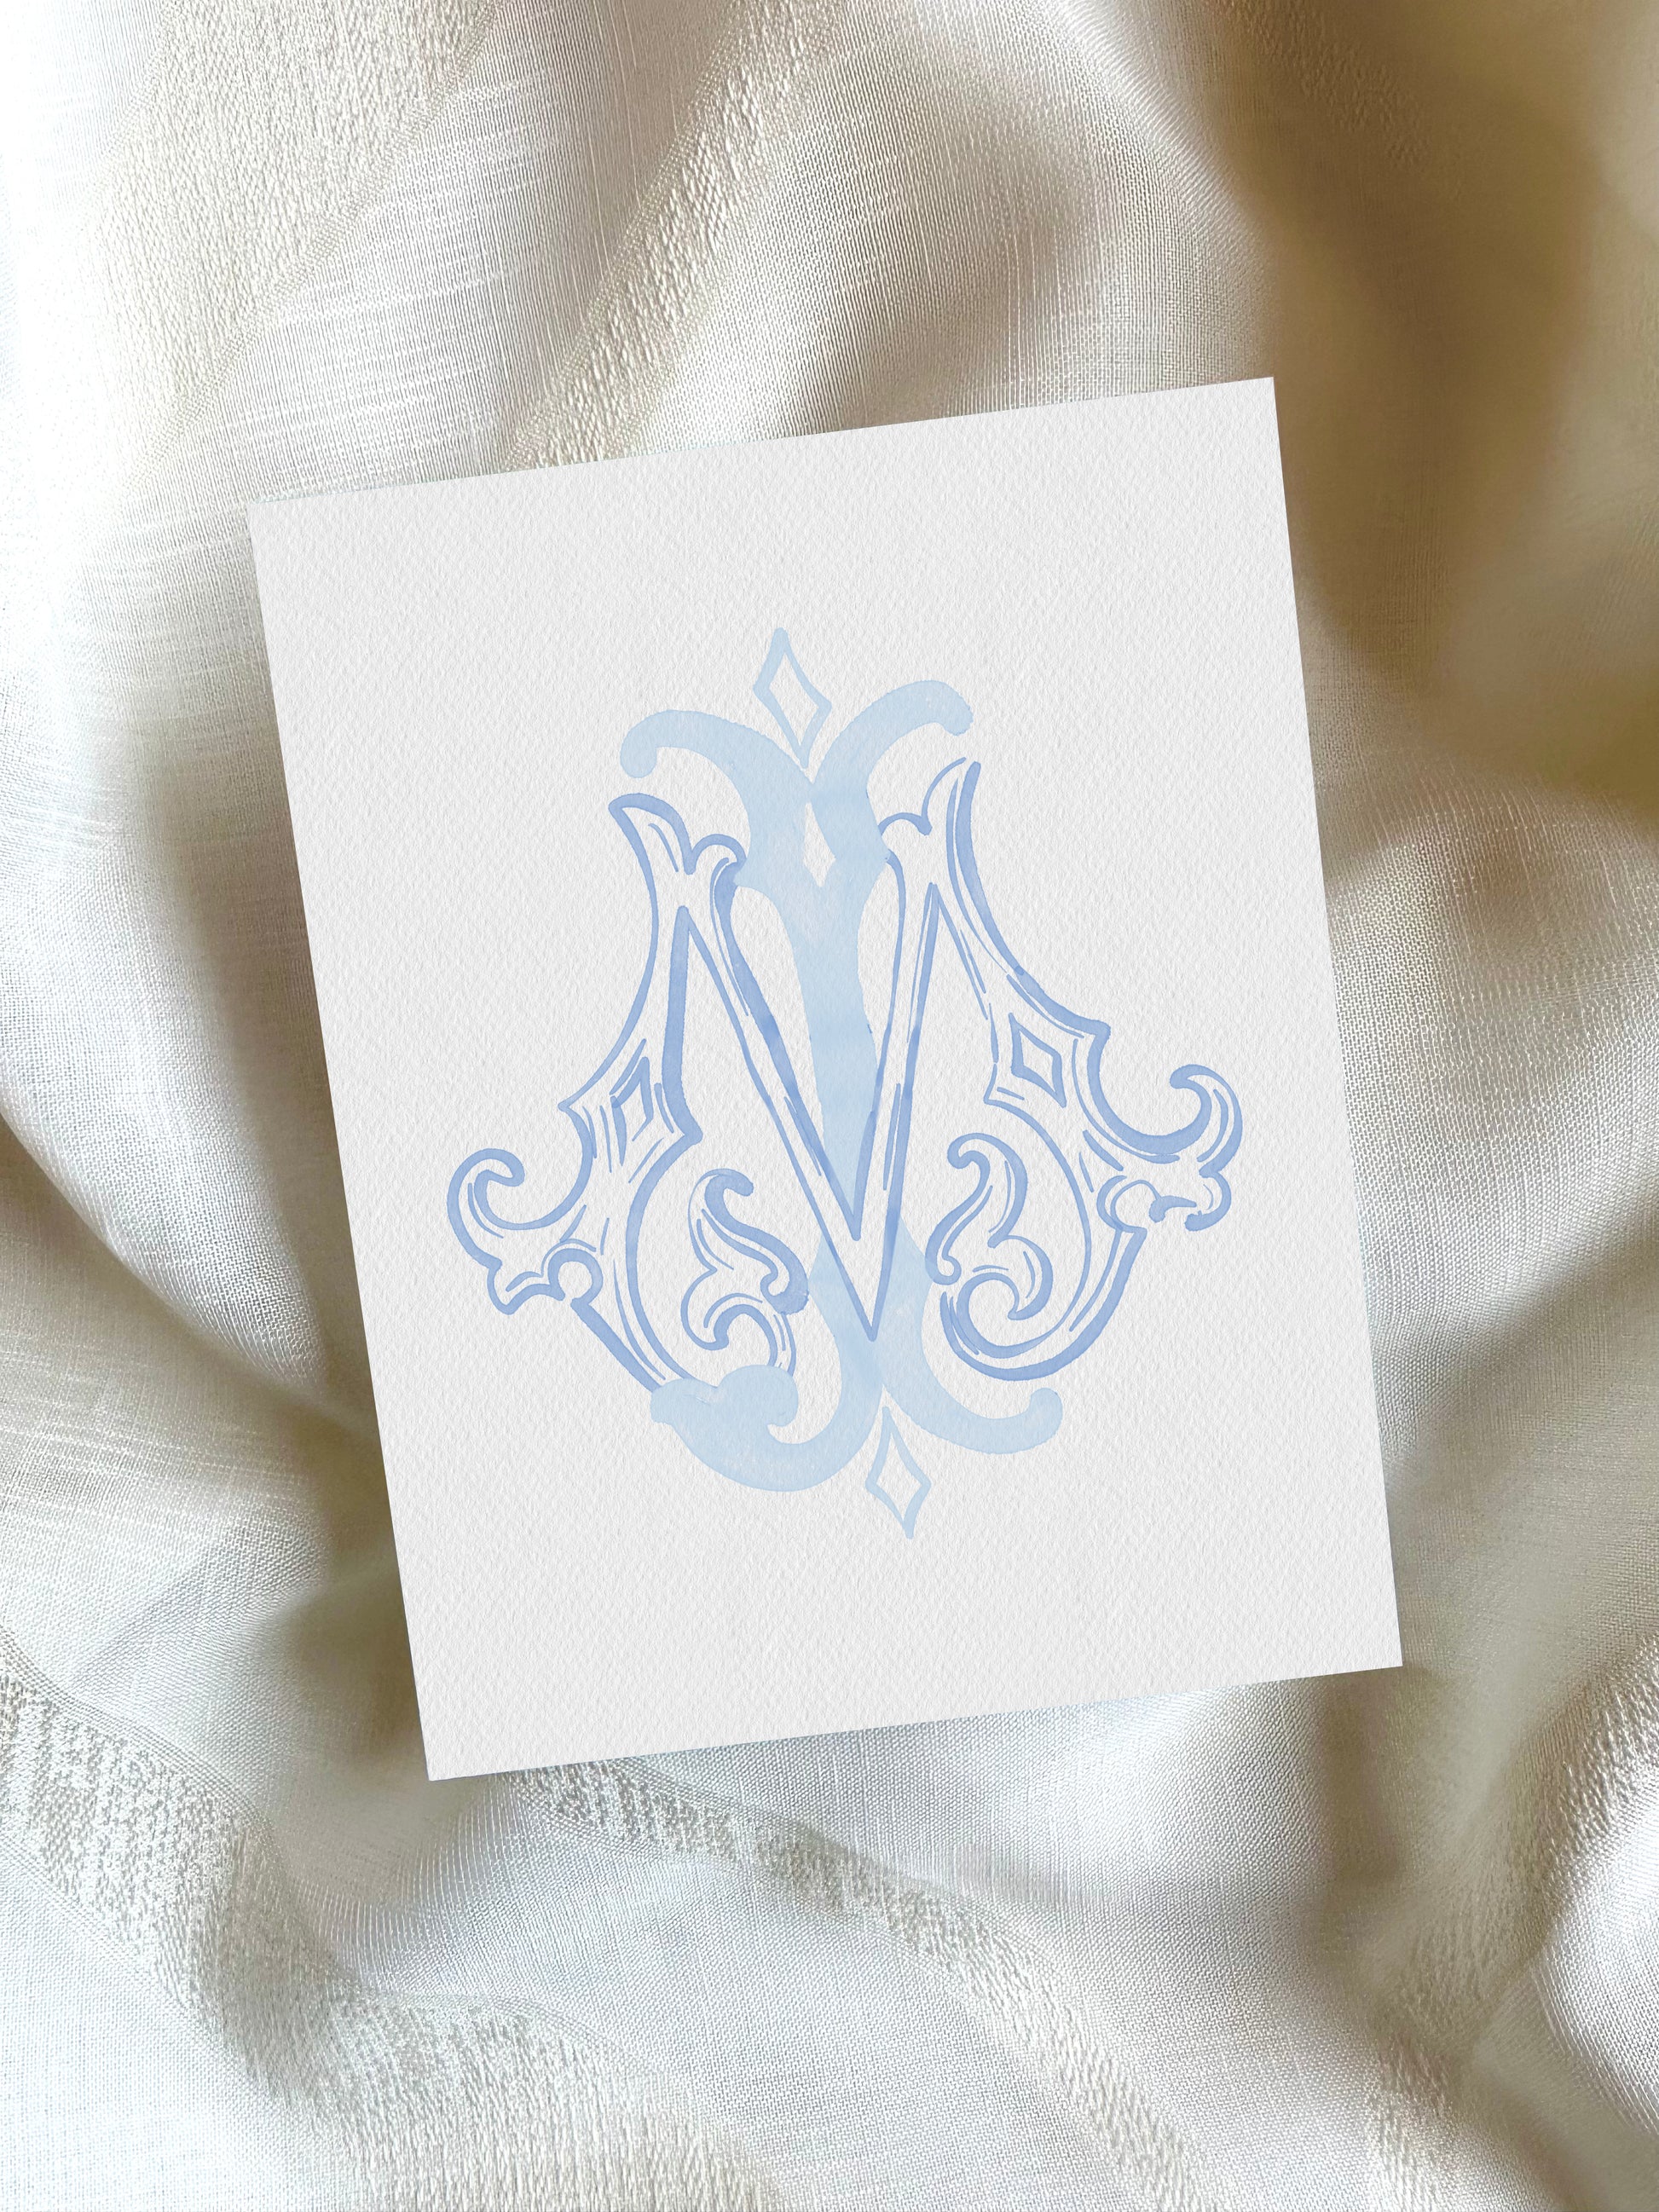 2 Letter Monogram with Letters JM MJ | Digital Download - Wedding Monogram SVG, Personal Logo, Wedding Logo for Wedding Invitations The Wedding Crest Lab